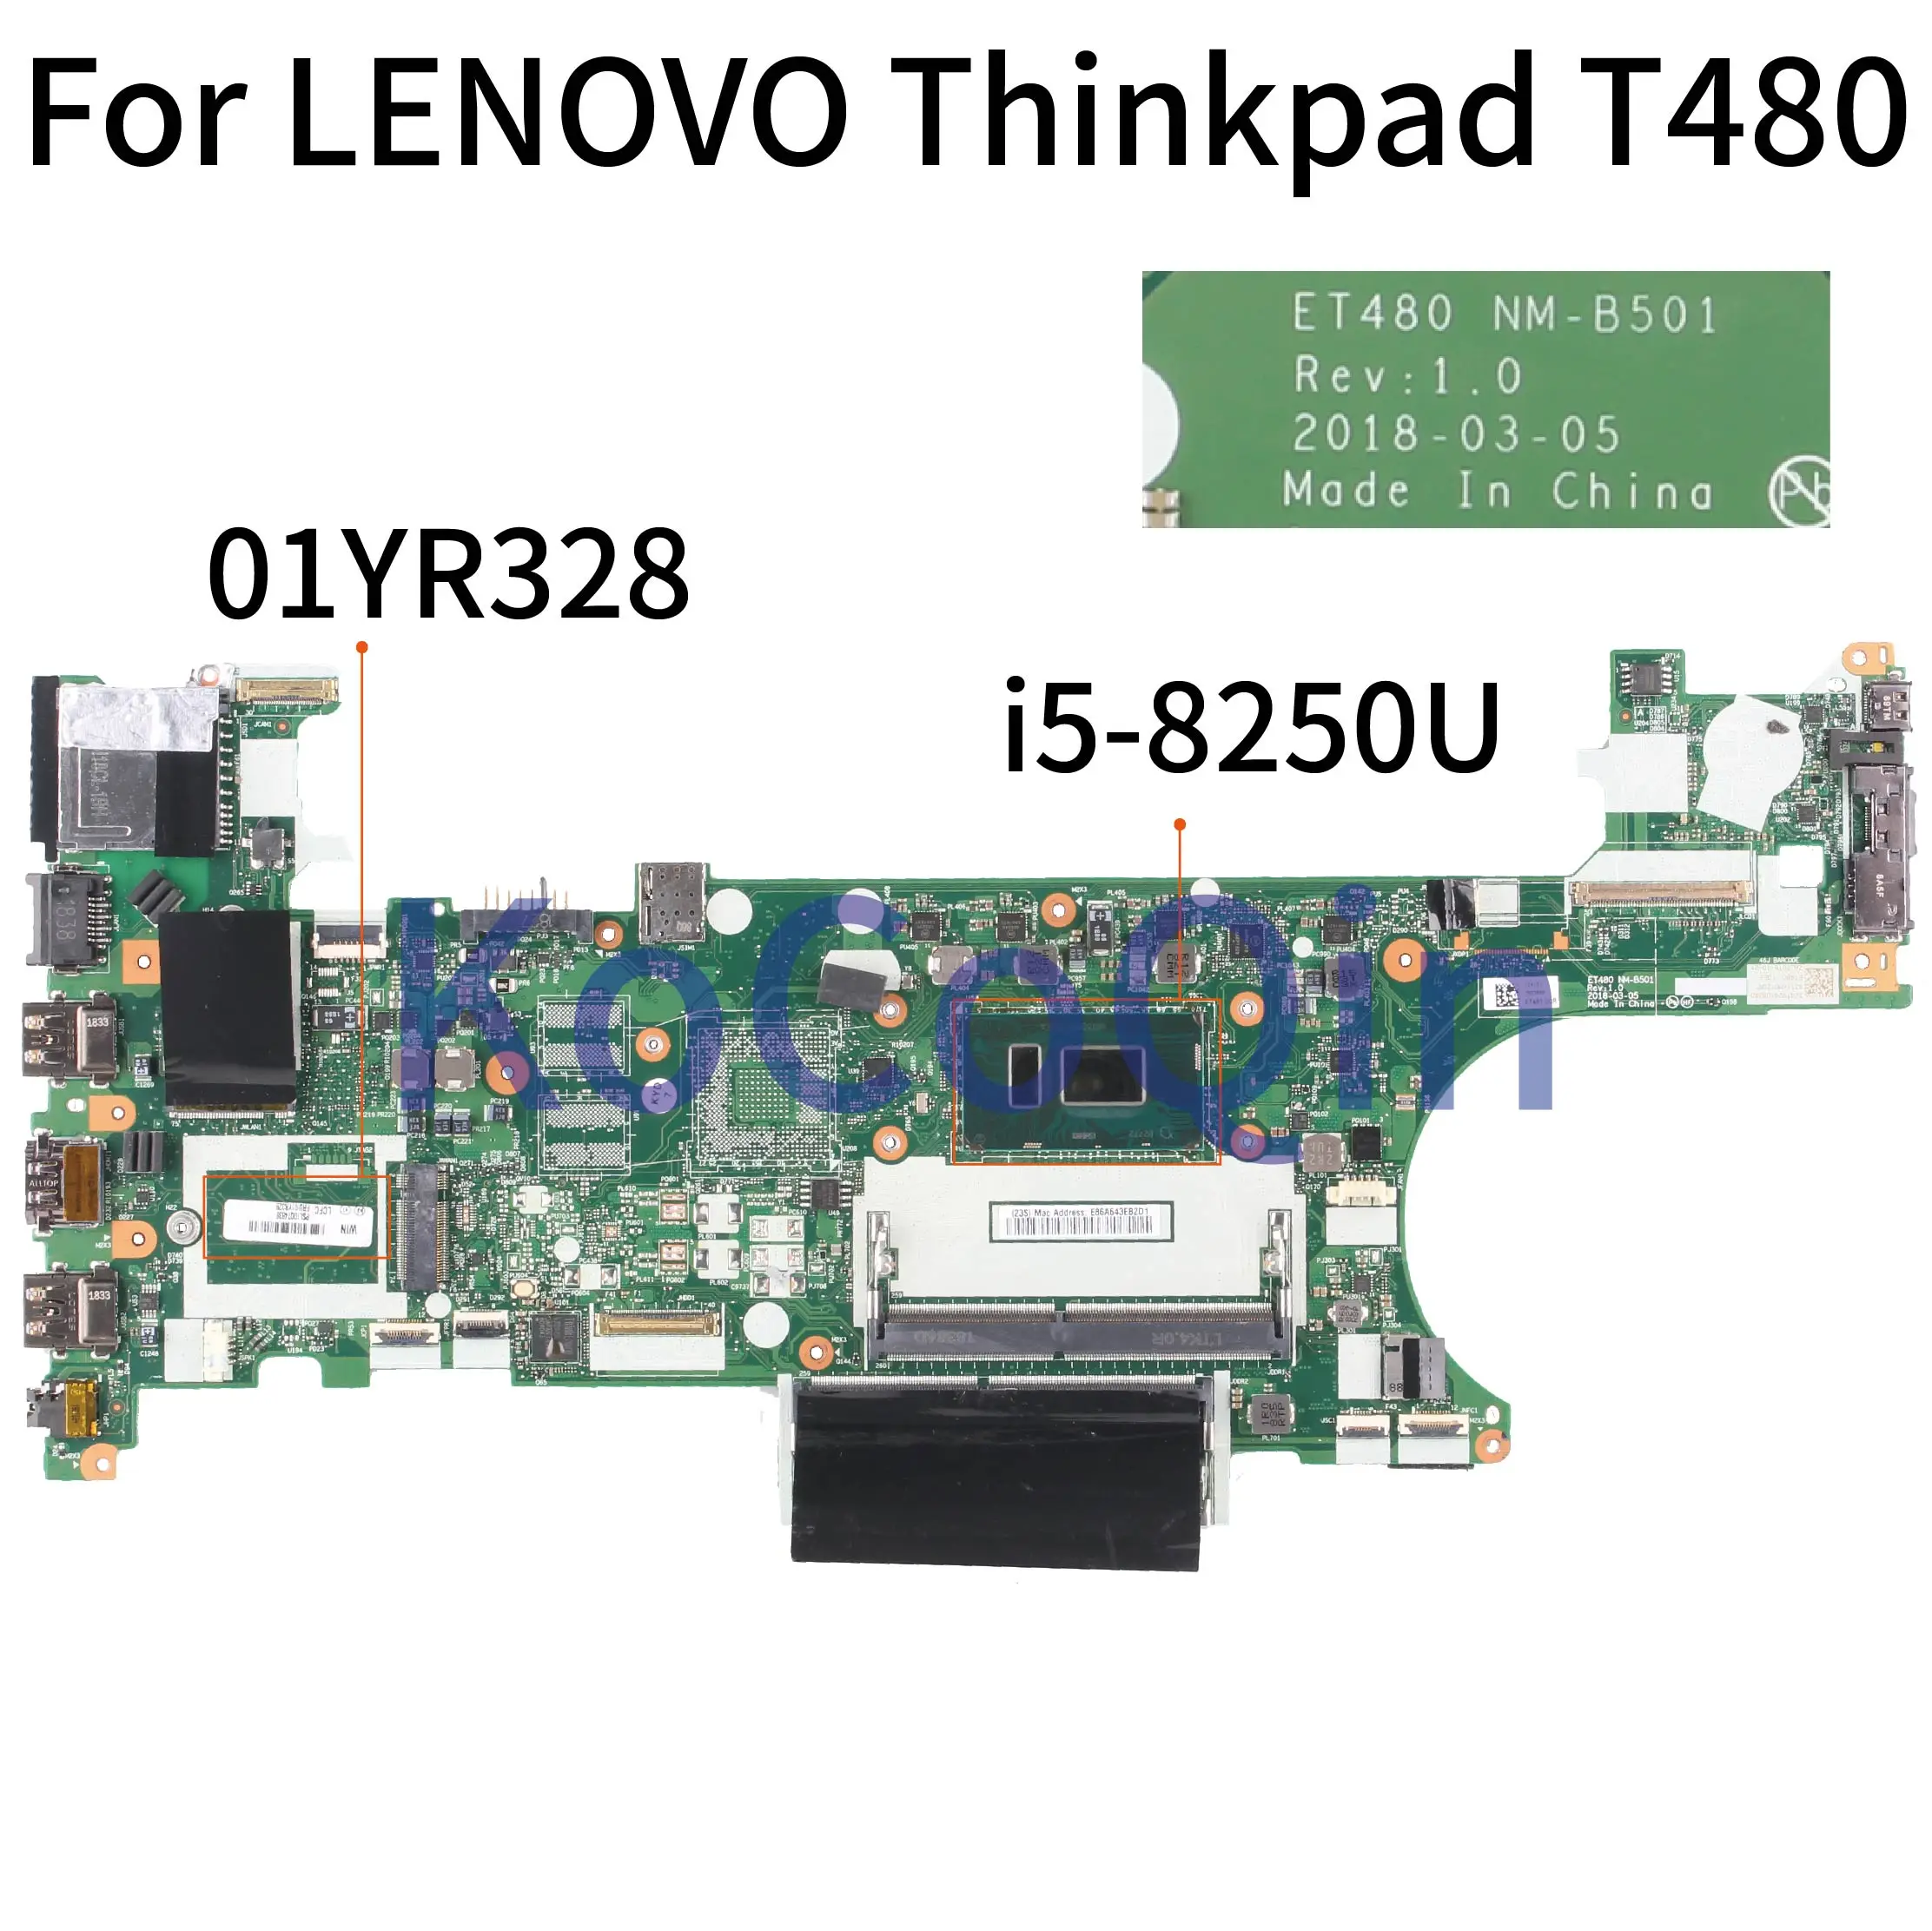 

KoCoQin Laptop motherboard For LENOVO Thinkpad T480 Core SR3LA i5-8250U Mainboard 01YR328 ET480 NM-B501 Tested 100%